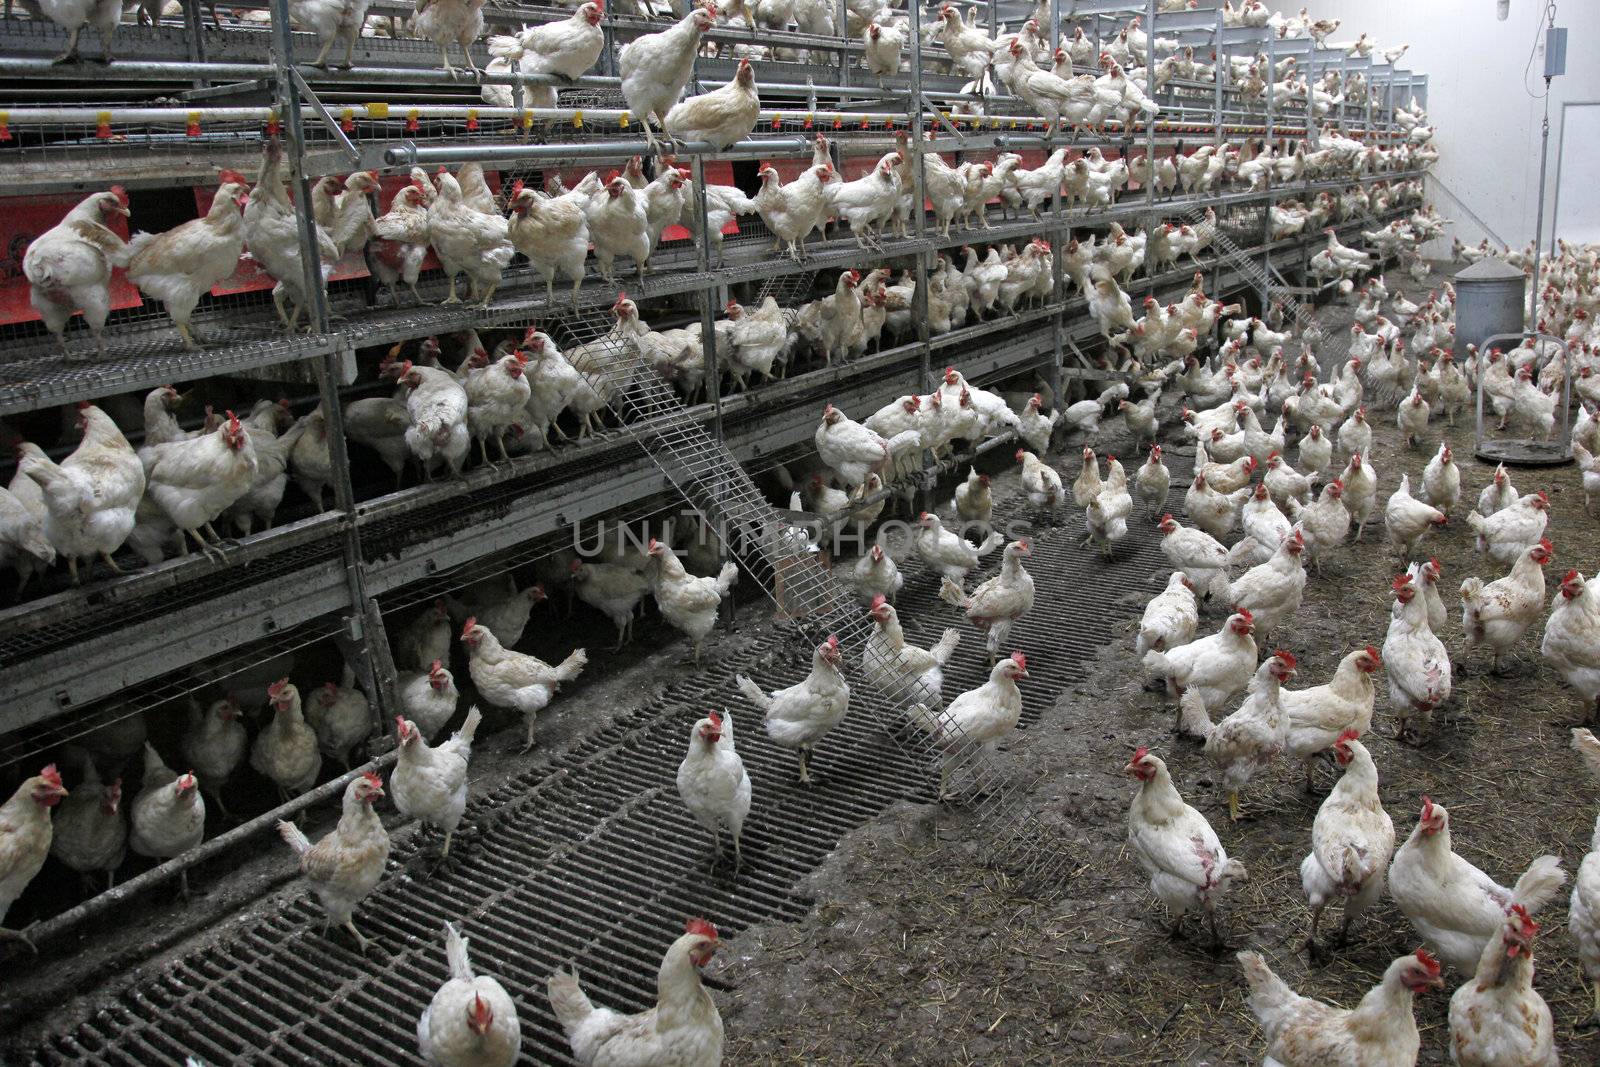 lot of biological chicken in barn by ahavelaar